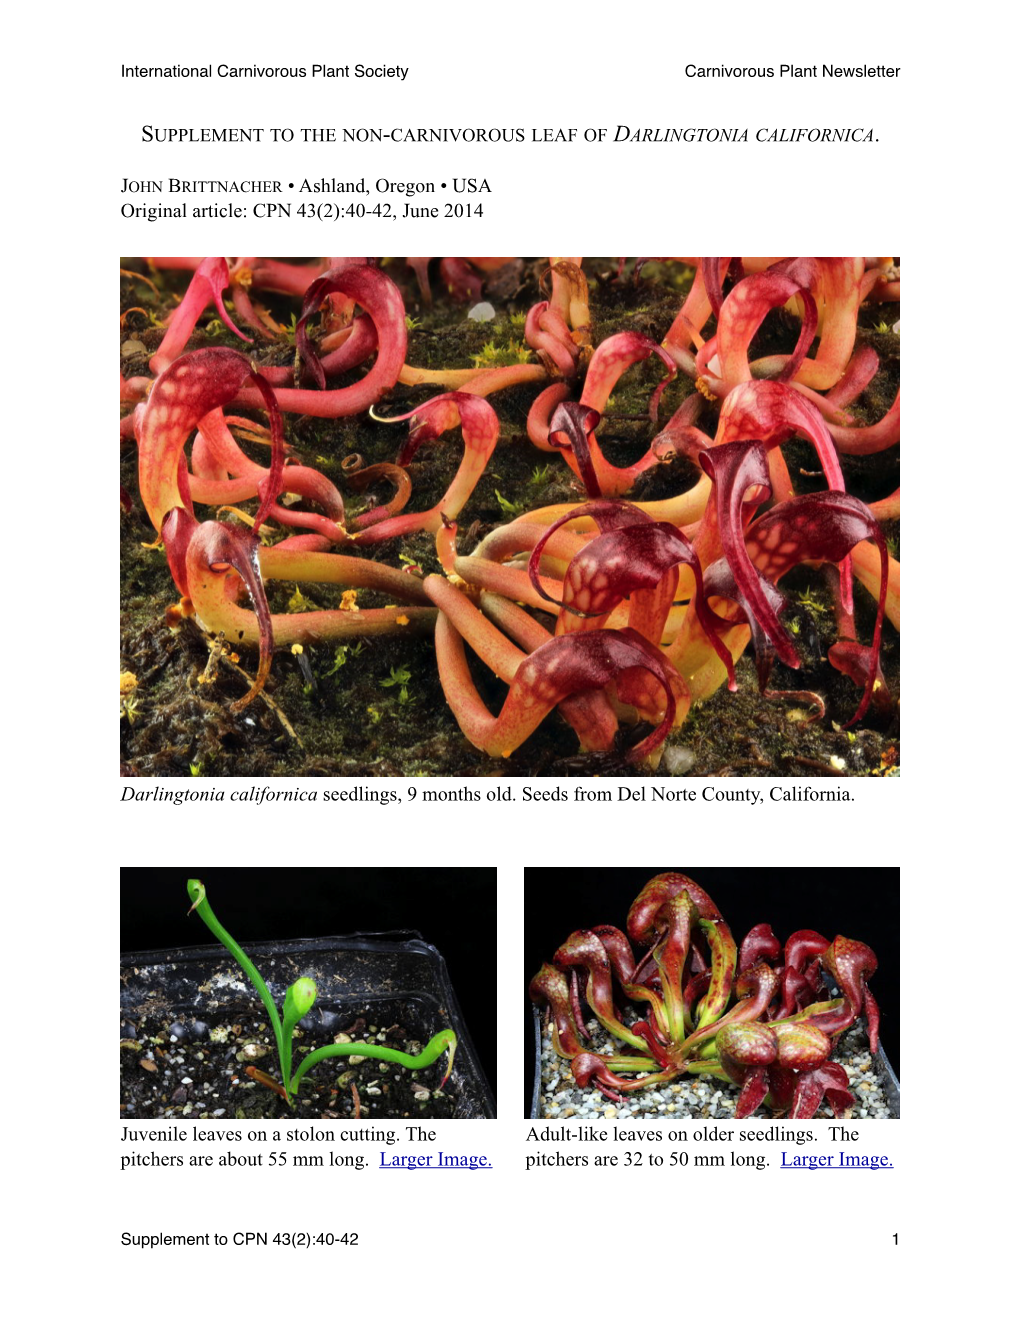 Darlingtonia Leaf Supplement.Pages